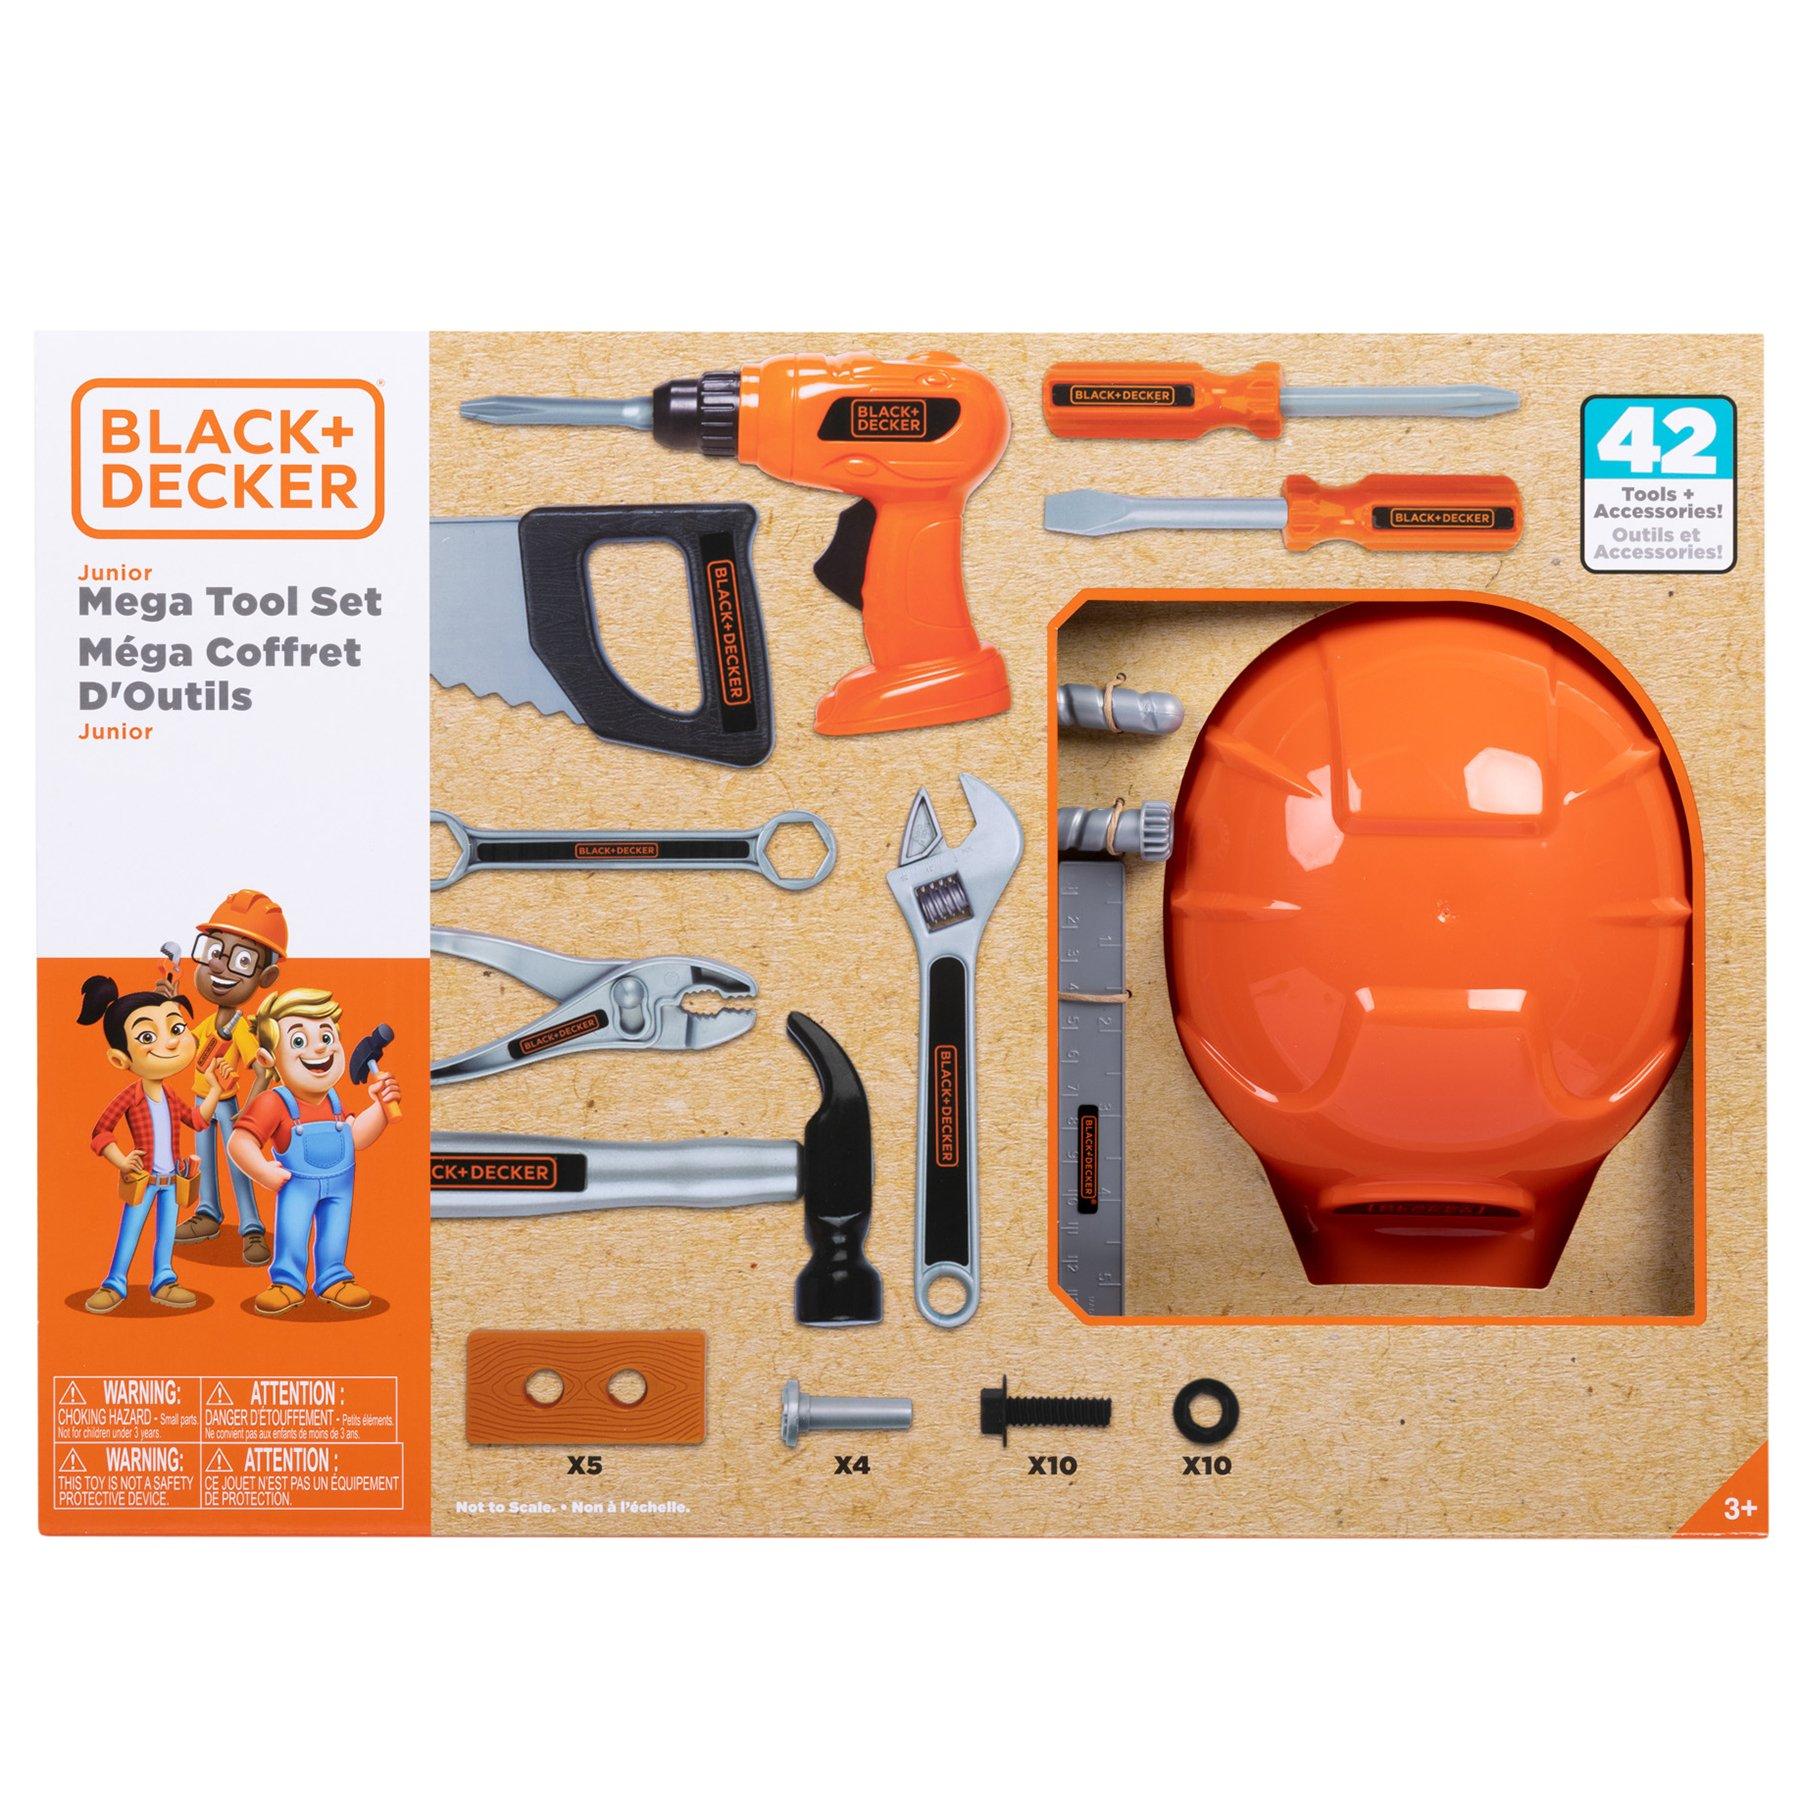 Black And Decker Junior Mega Tool Set 42 Tools And Accessories New In Box